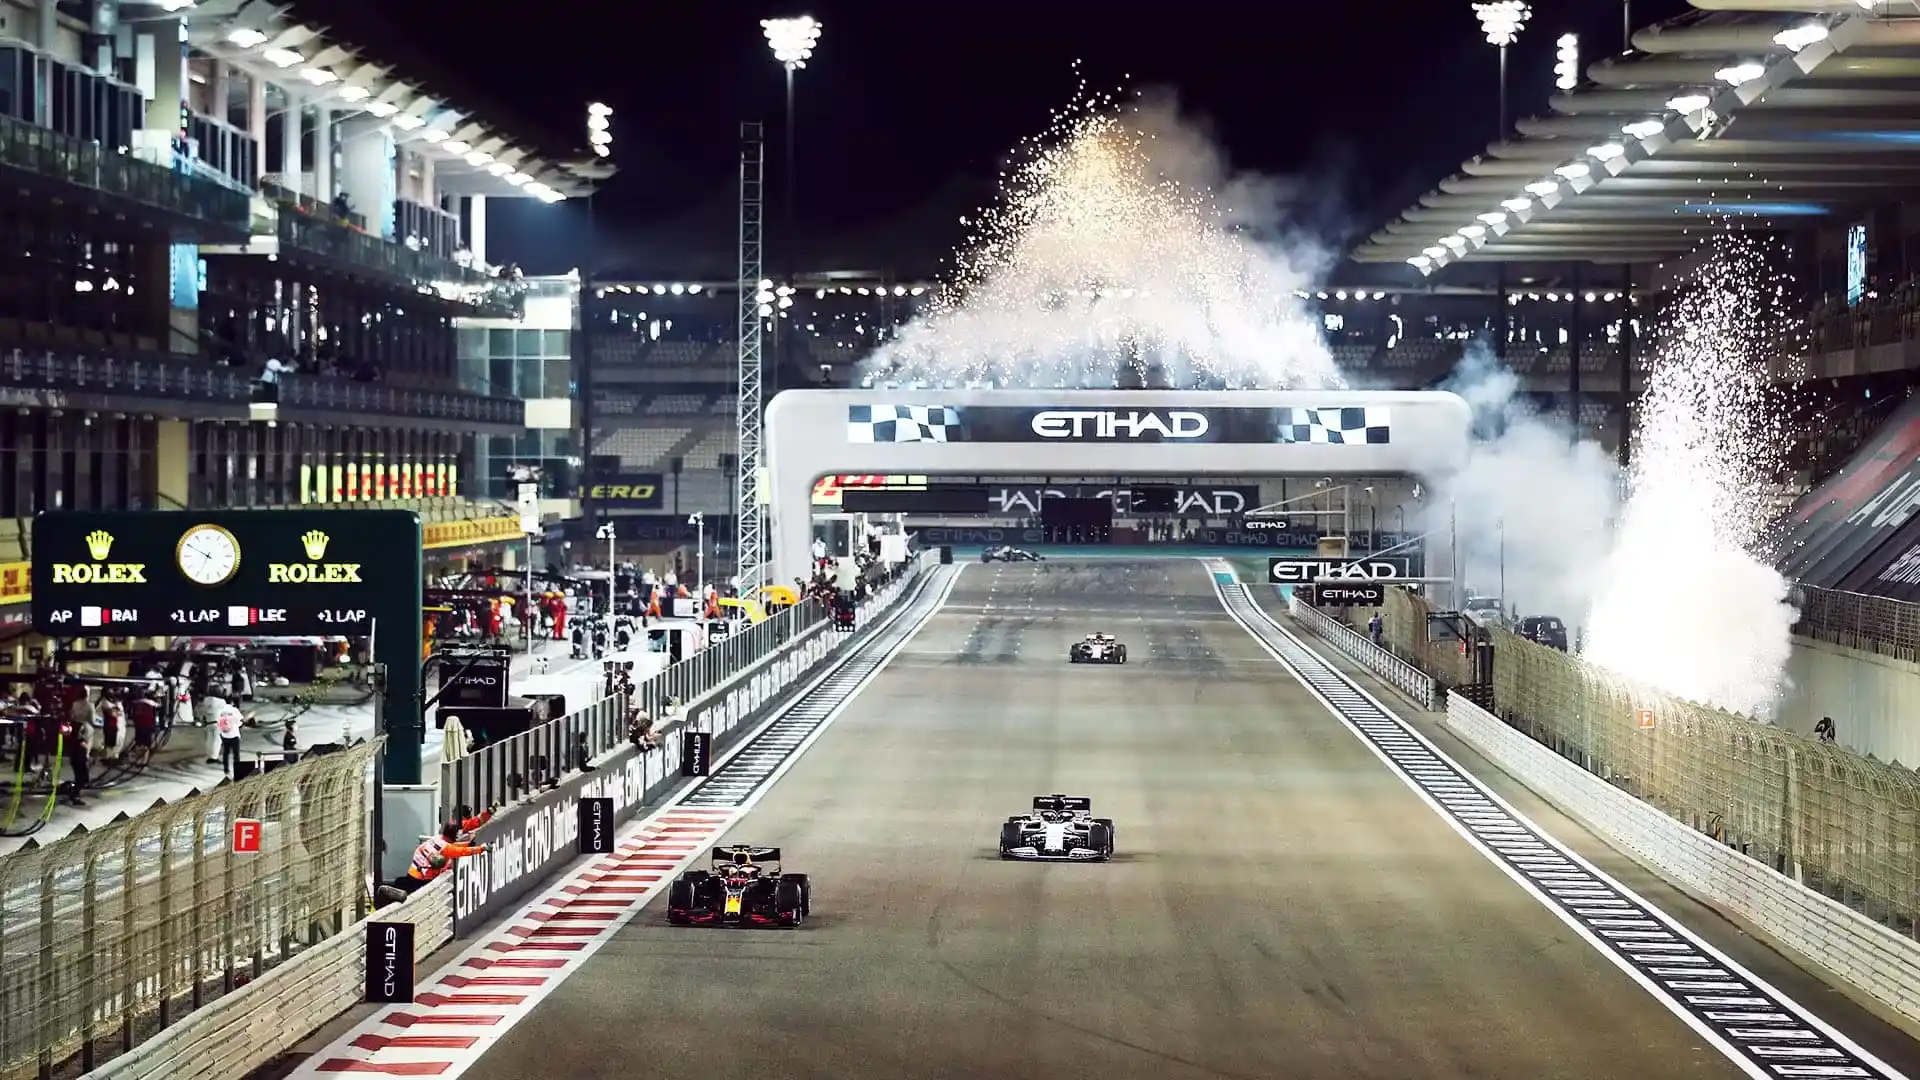 05 Nights Live Formula 1 Car Racing Experience at Abu Dhabi Grand Prix, just in £2299pp